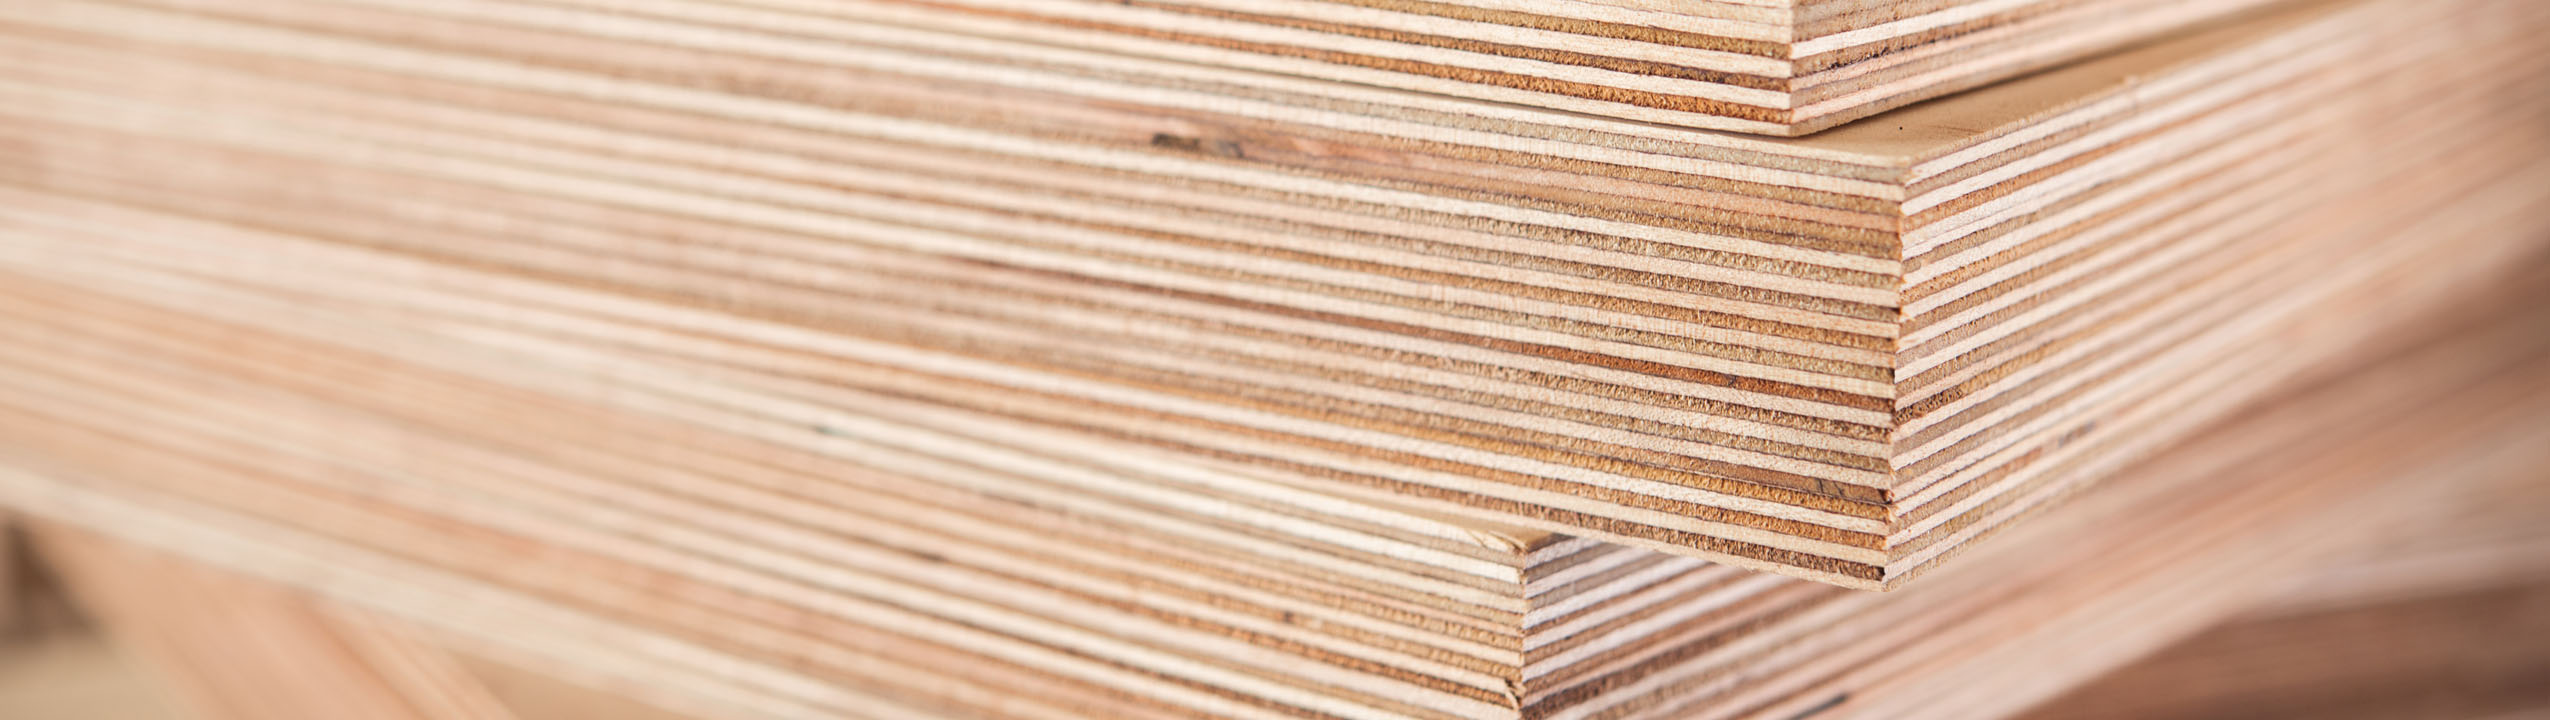 Plywood Panels